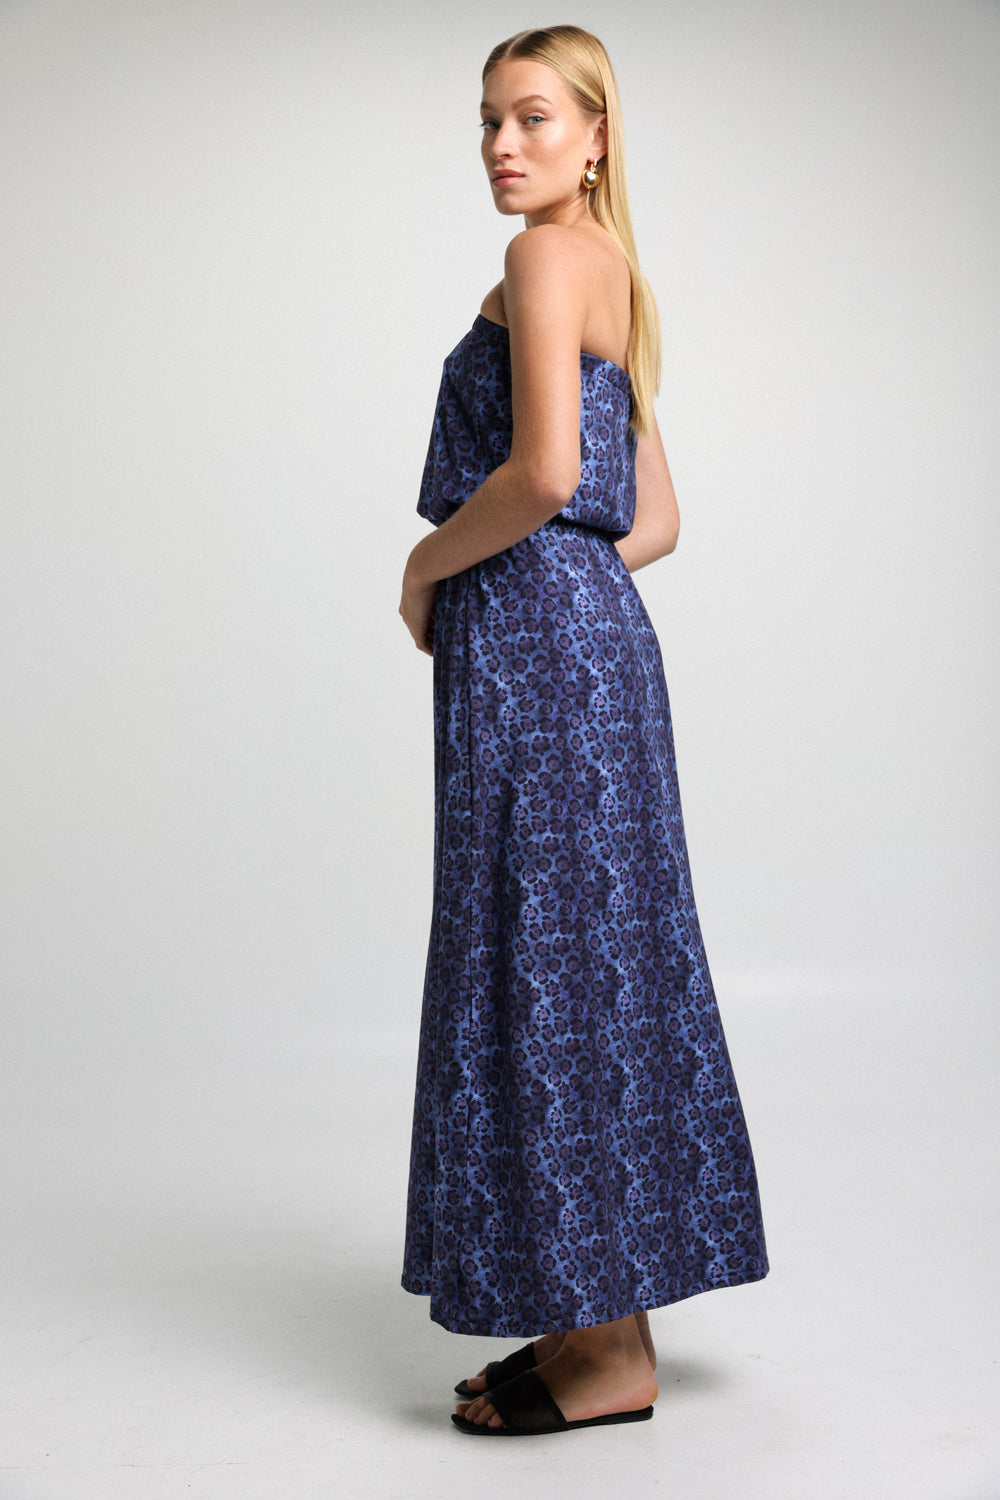 Her Strapless Blue Leopard Dress